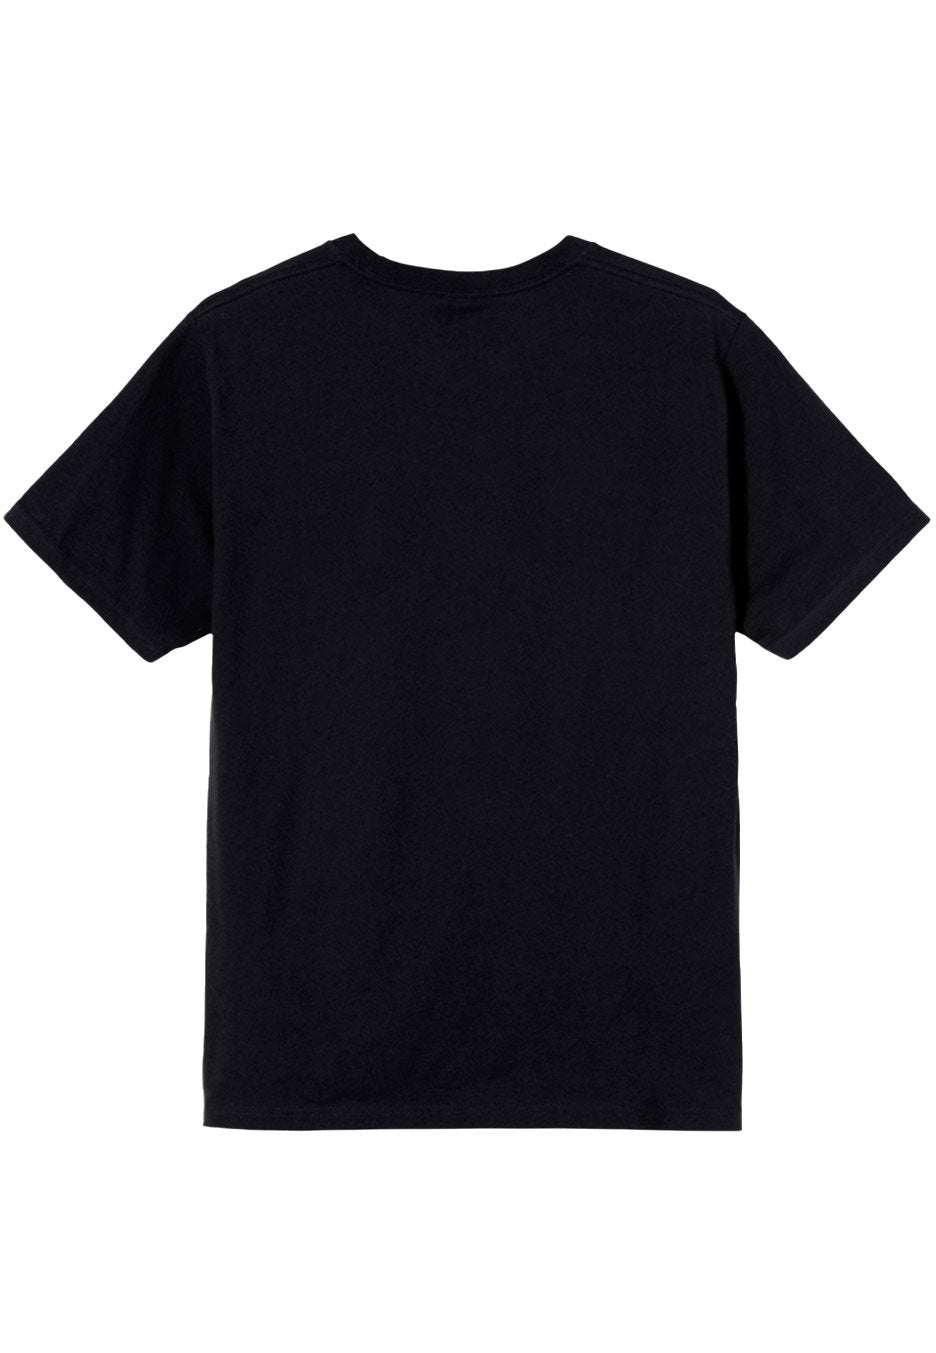 Enforcer - Nostalgia - T-Shirt